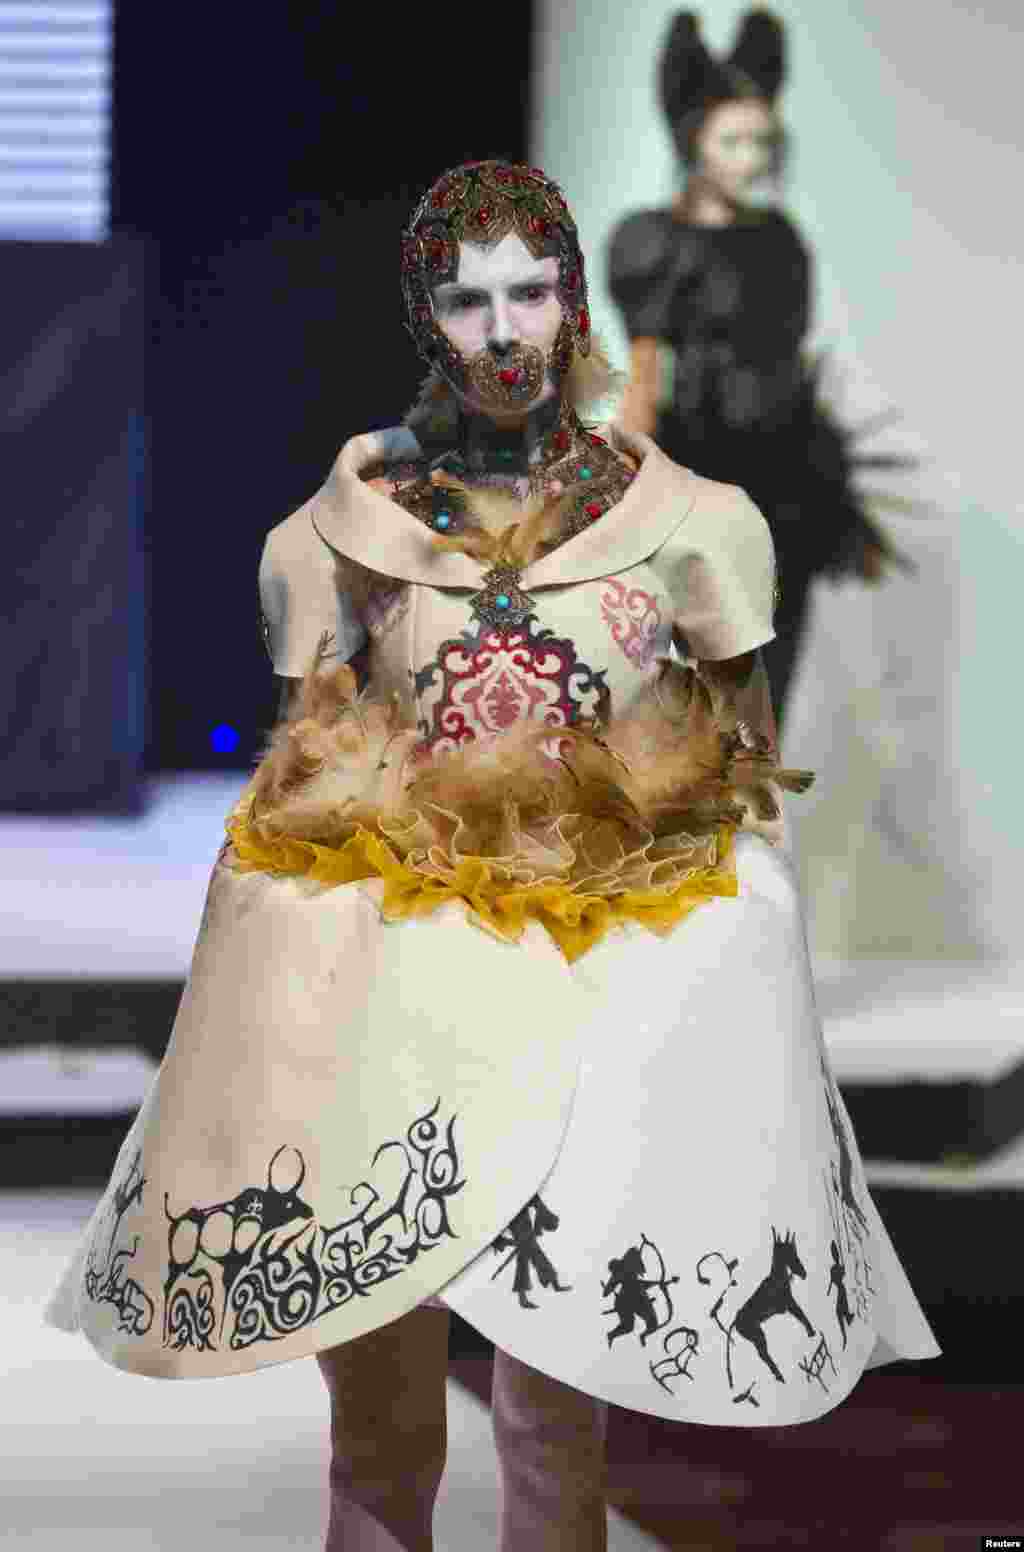 Aidar Akhmetov raised eyebrows with this unusual dress.